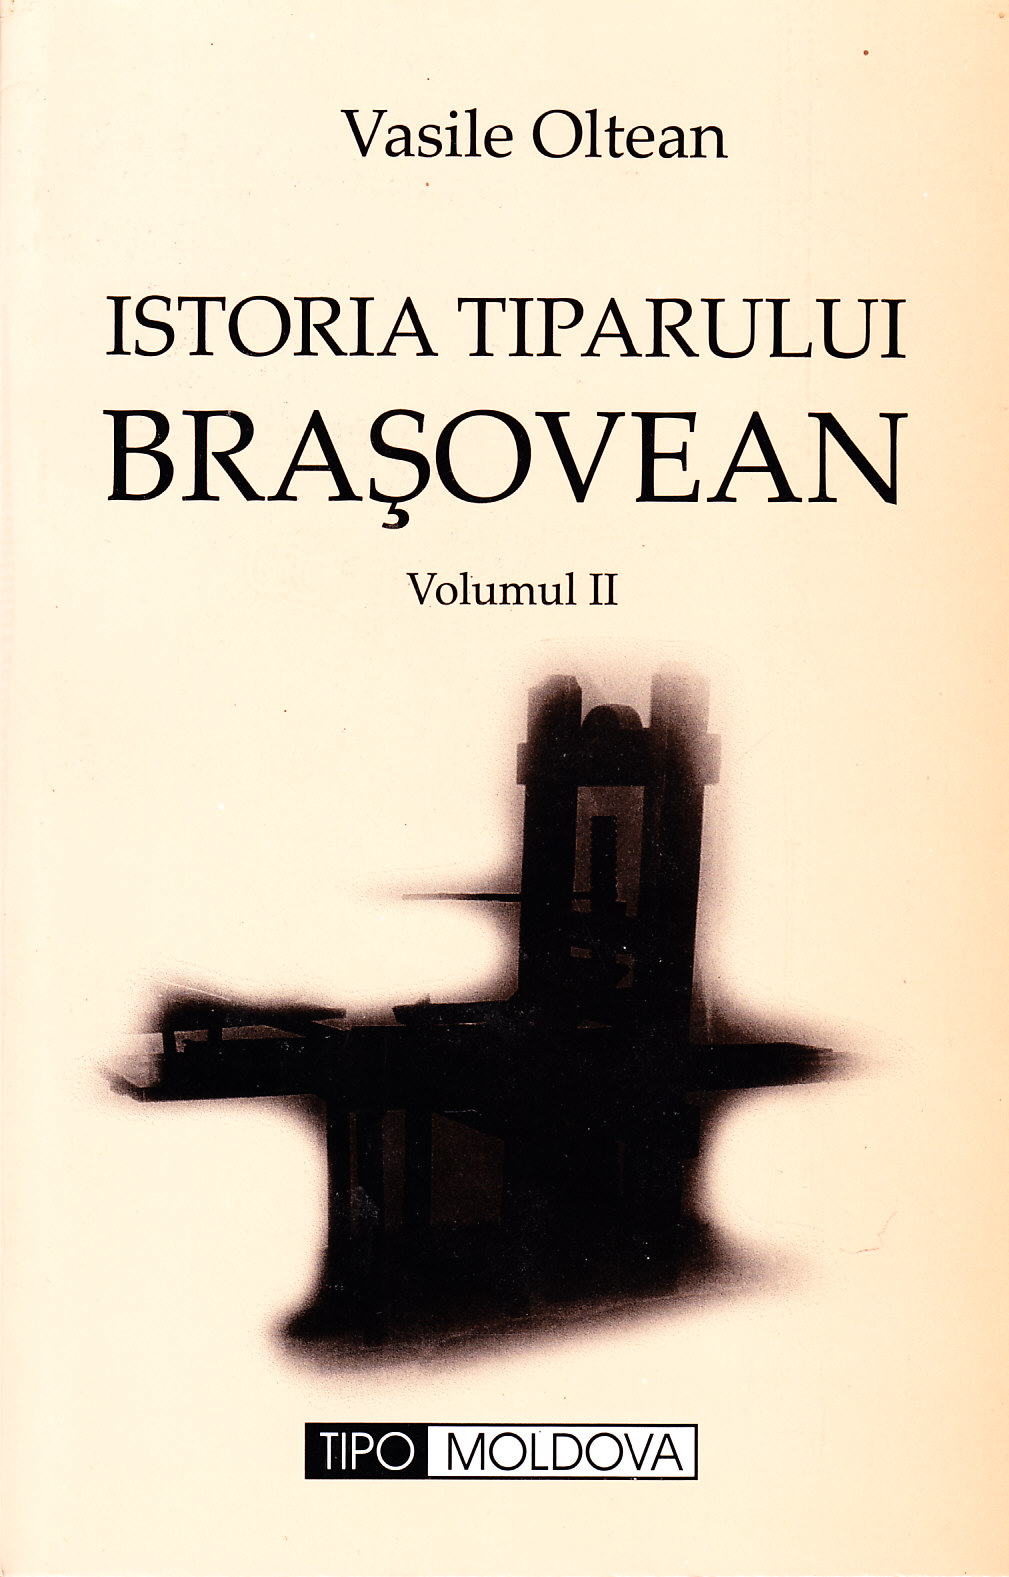 Istoria tiparului brasovean volumul II - Vasile Oltean